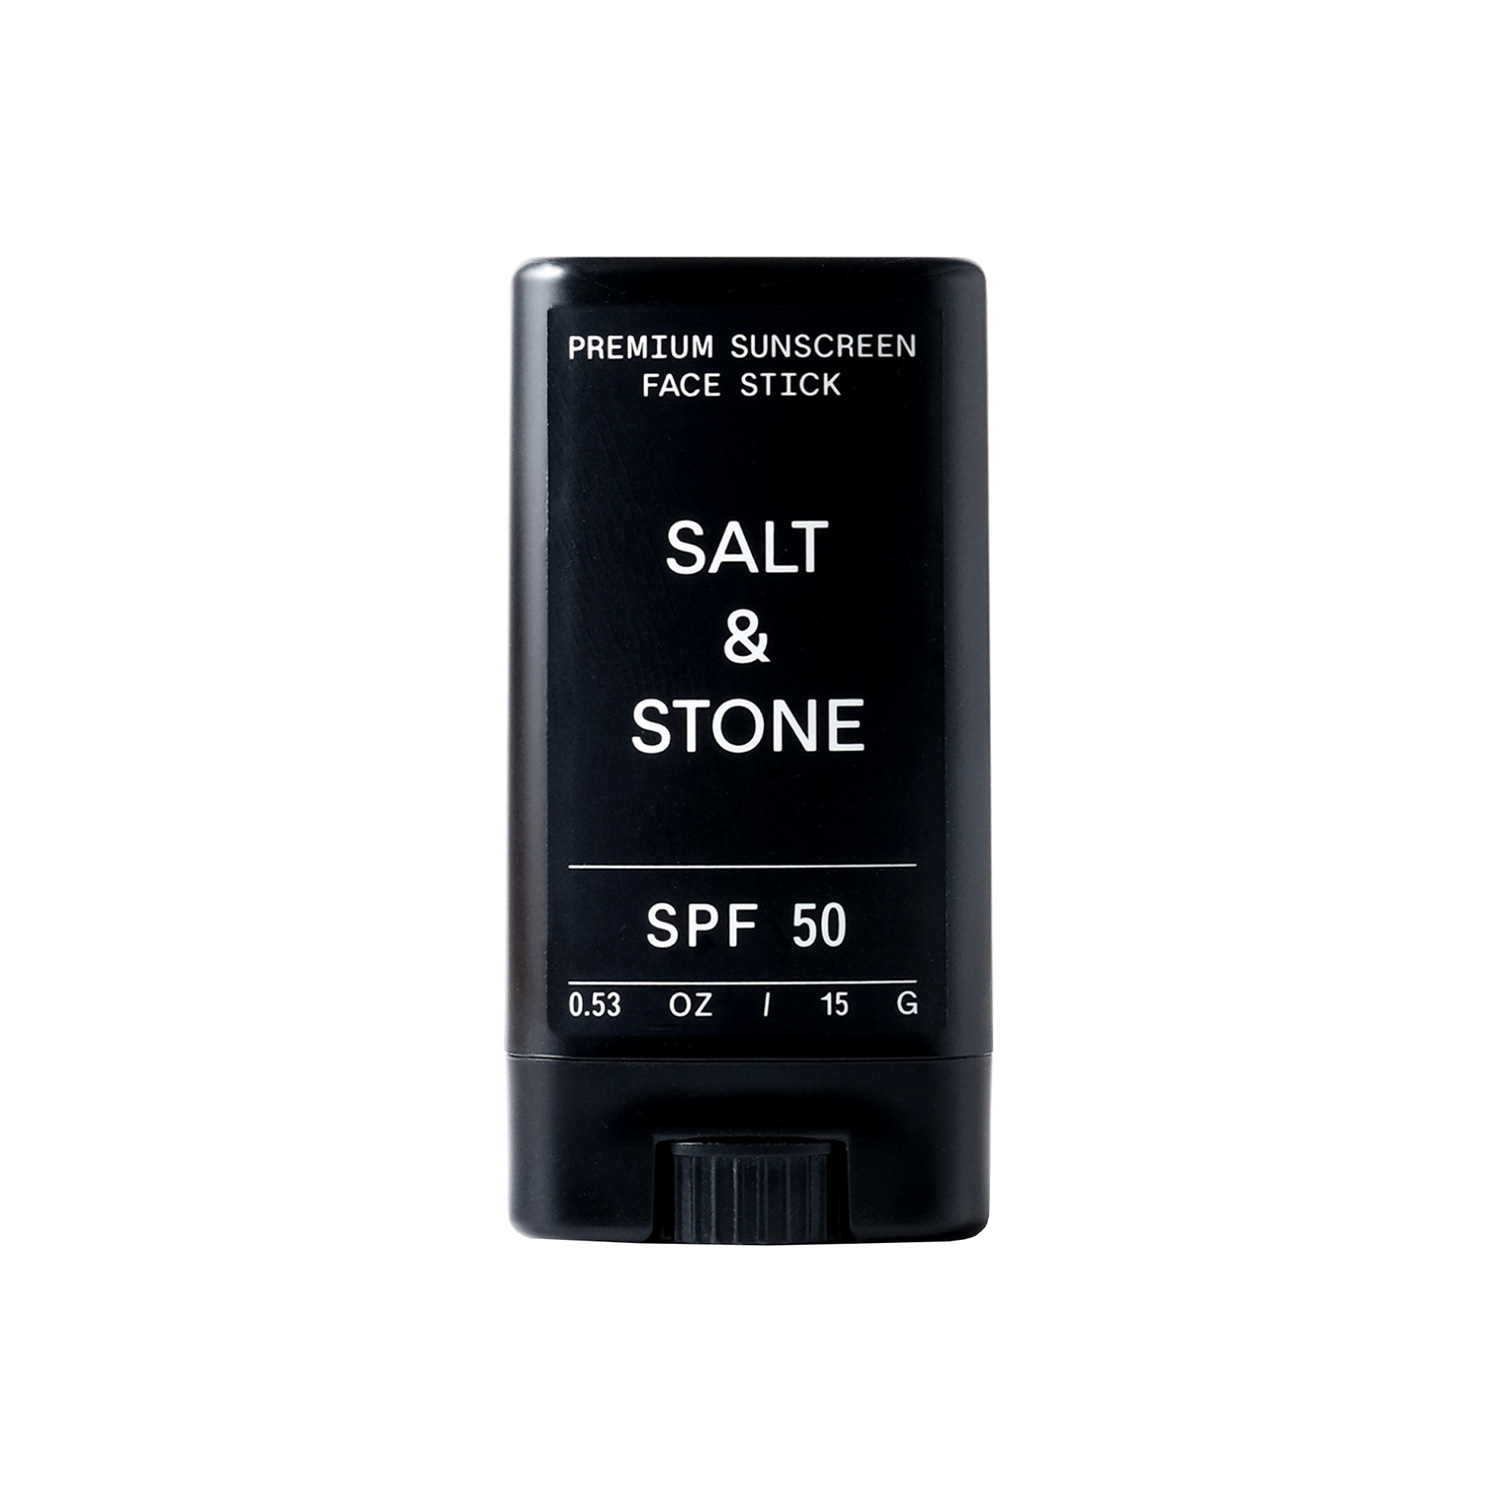 Salt & Stone SPF 50 Face Stick